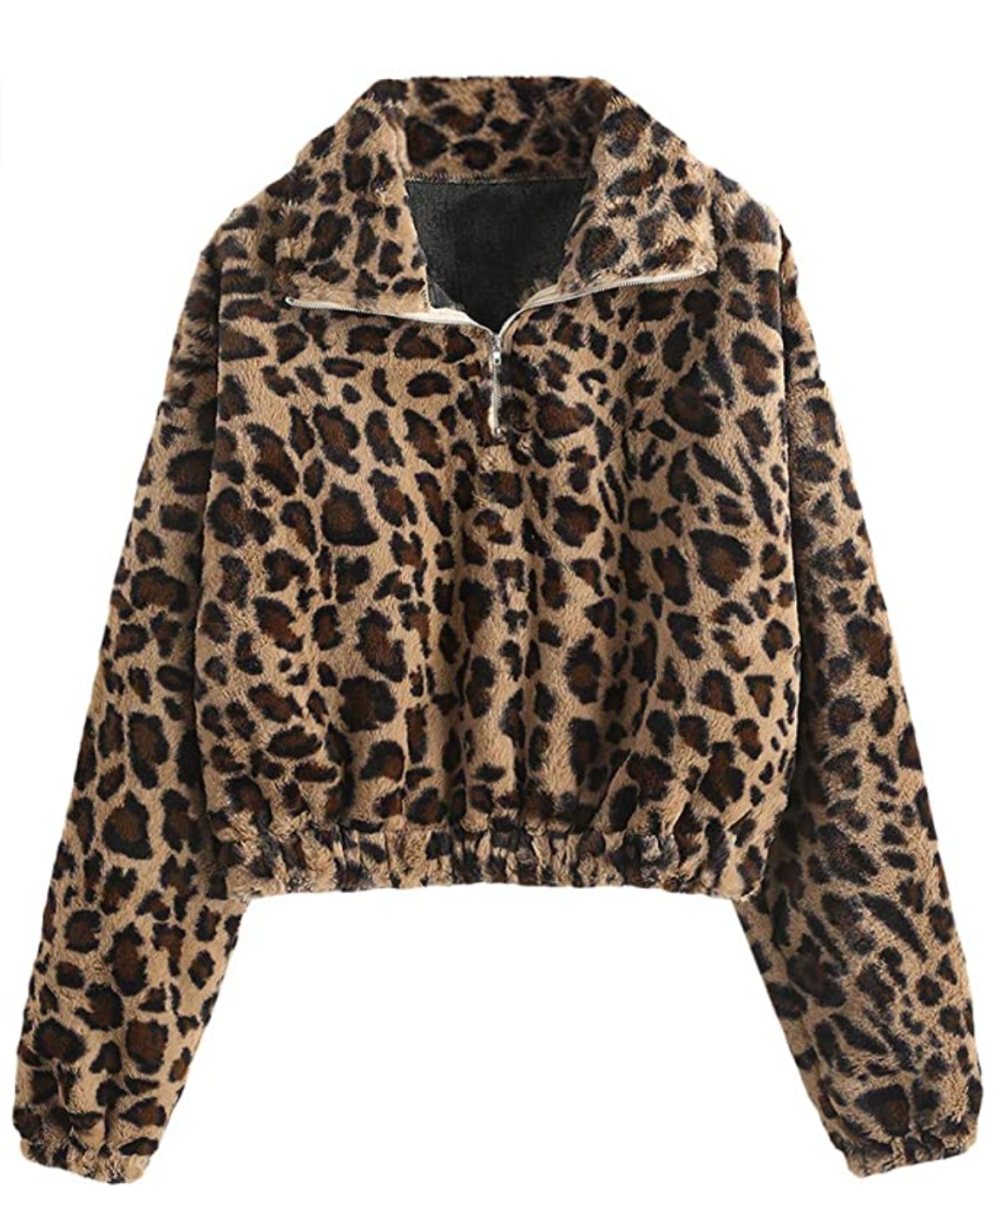 ZAFUL Women's Faux Fur Pullover Half Zip Crop Sweatshirt